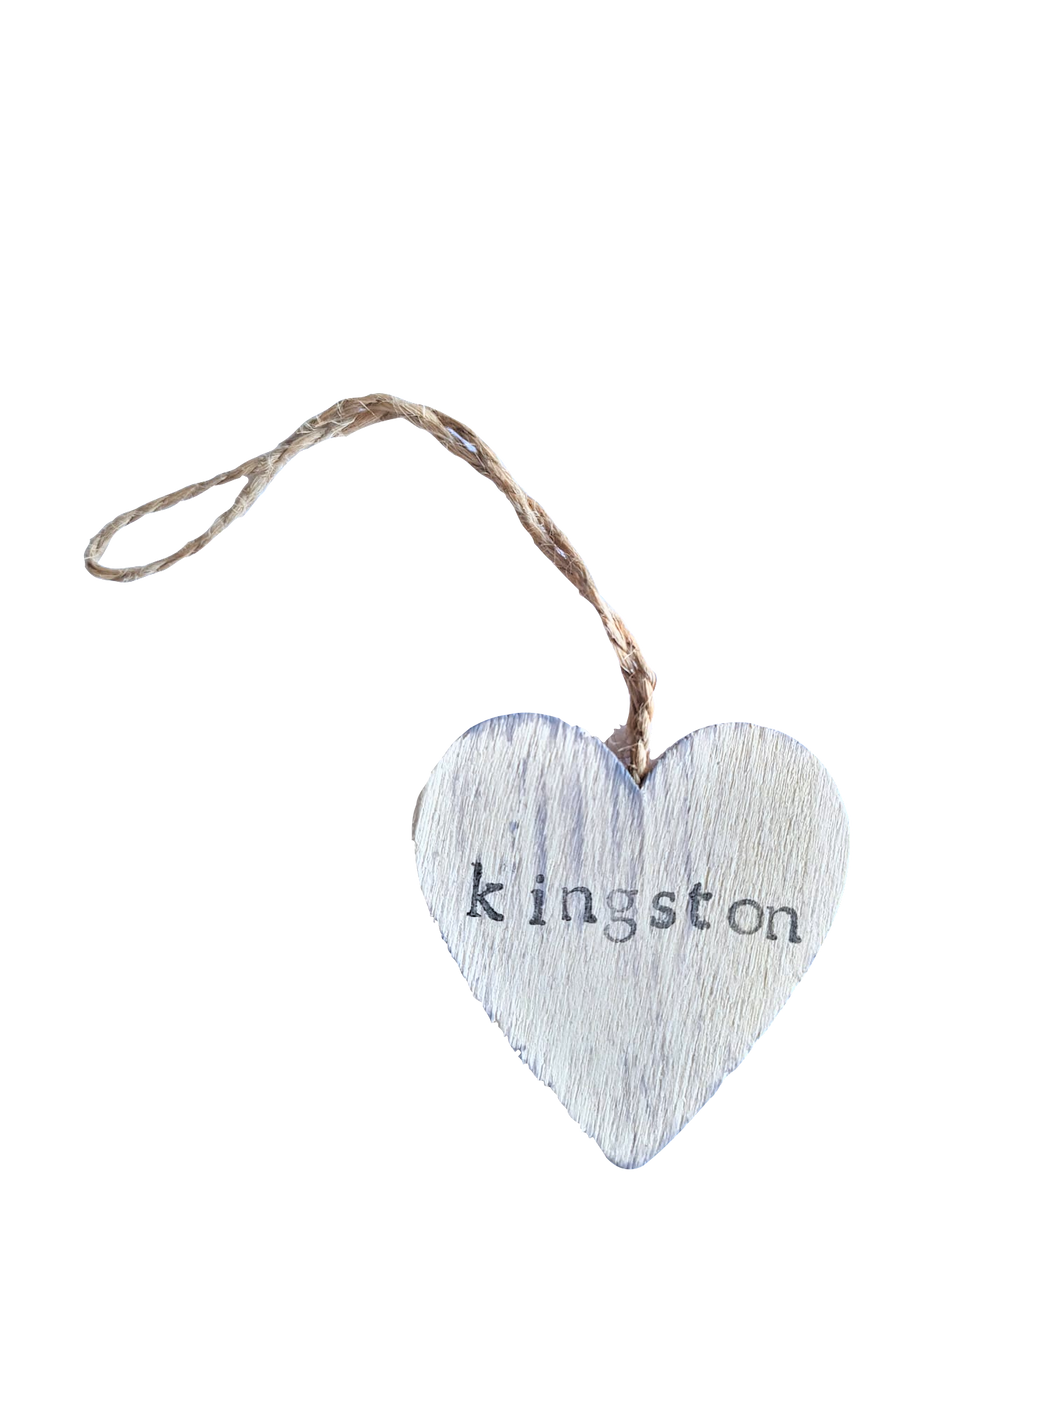 Kingston wooden hanging heart